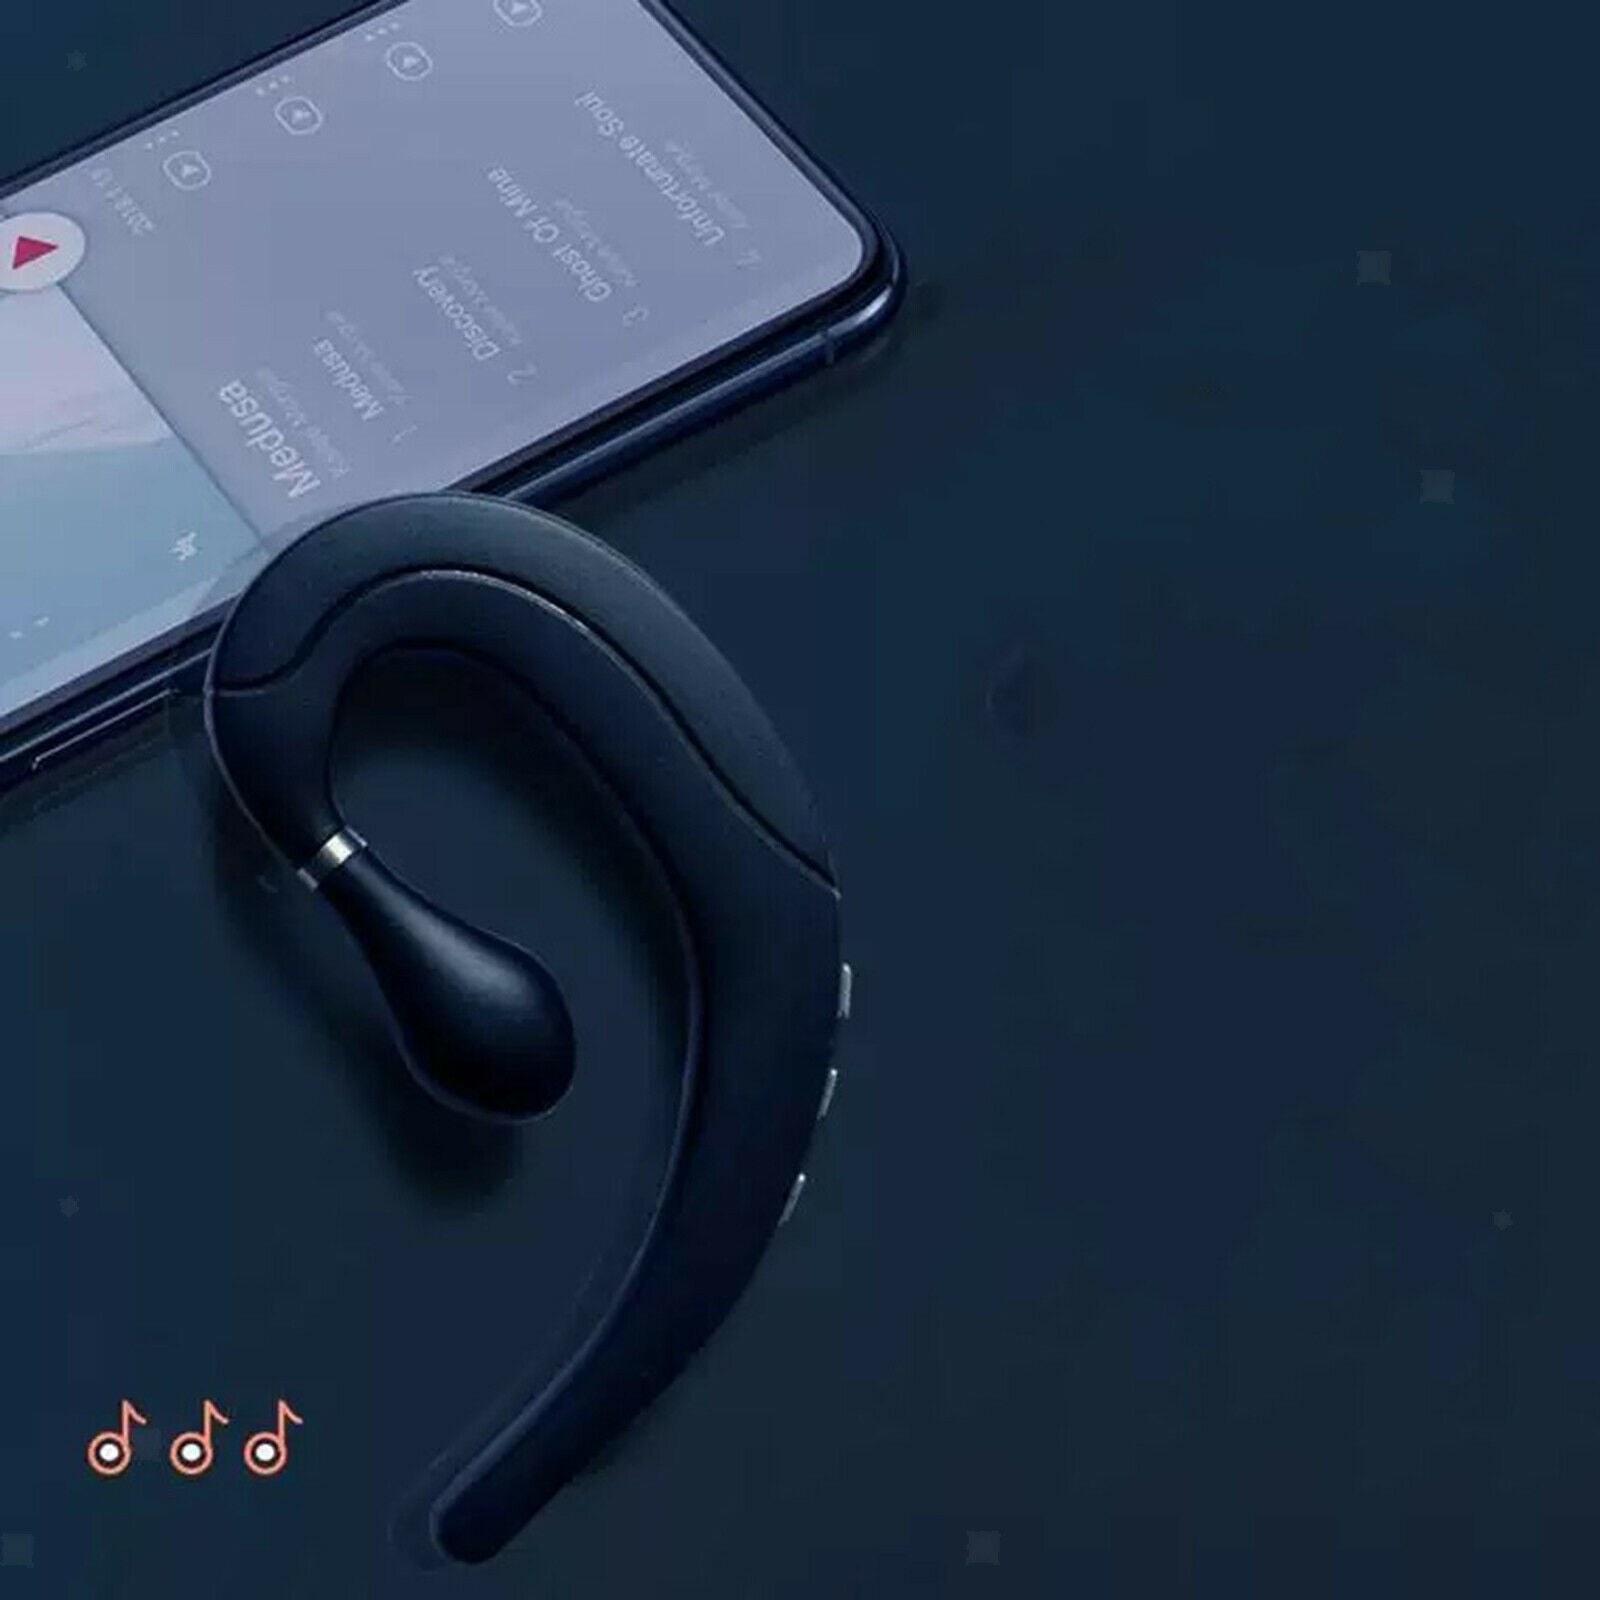 Single Ear-Hook Bone Conduction Earpiece Hands Free Earphone for Android/IOS